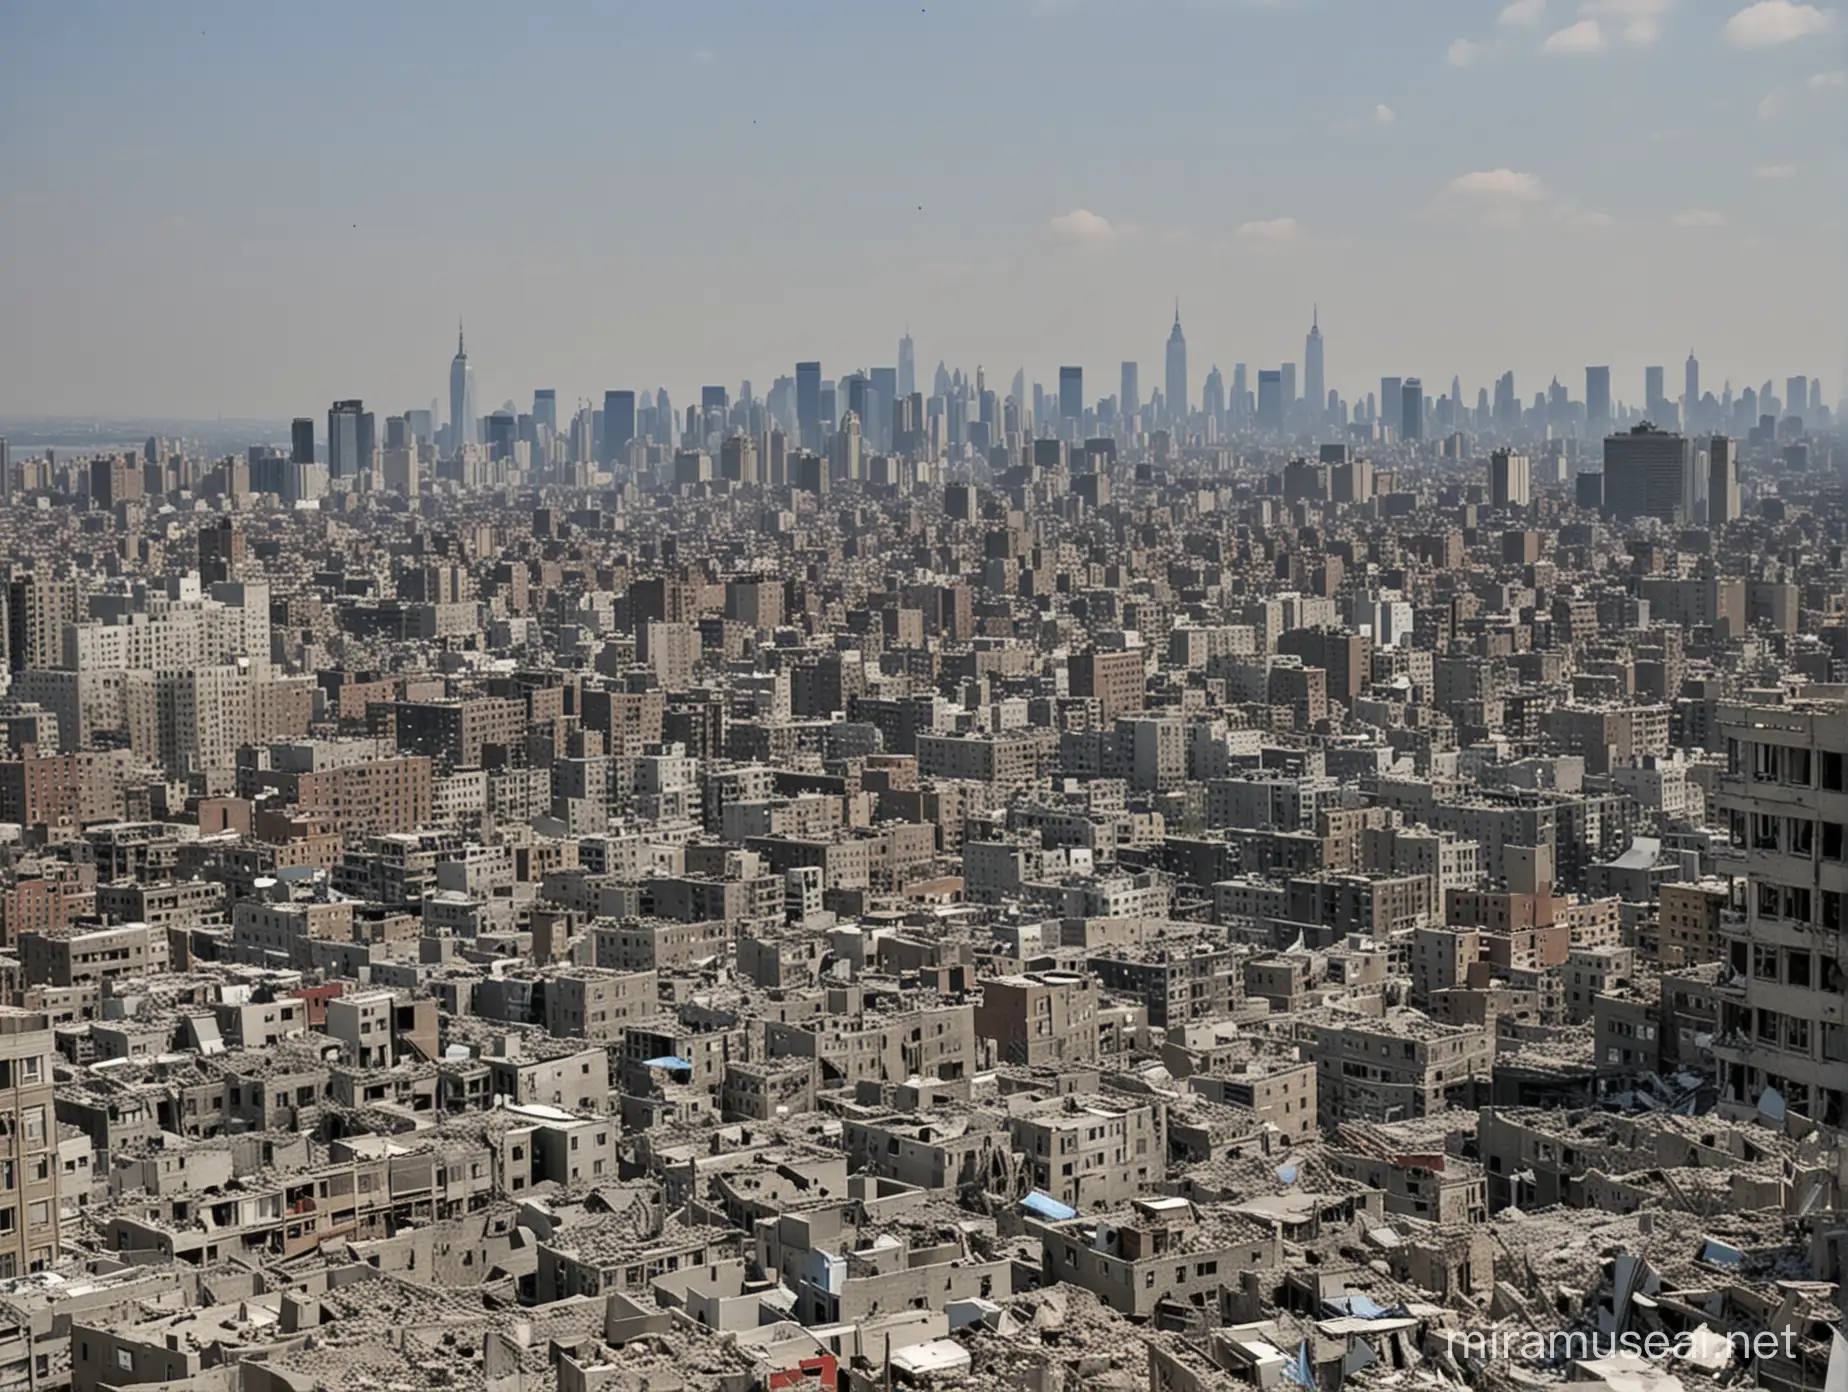 PostApocalyptic New York City Devastated by War